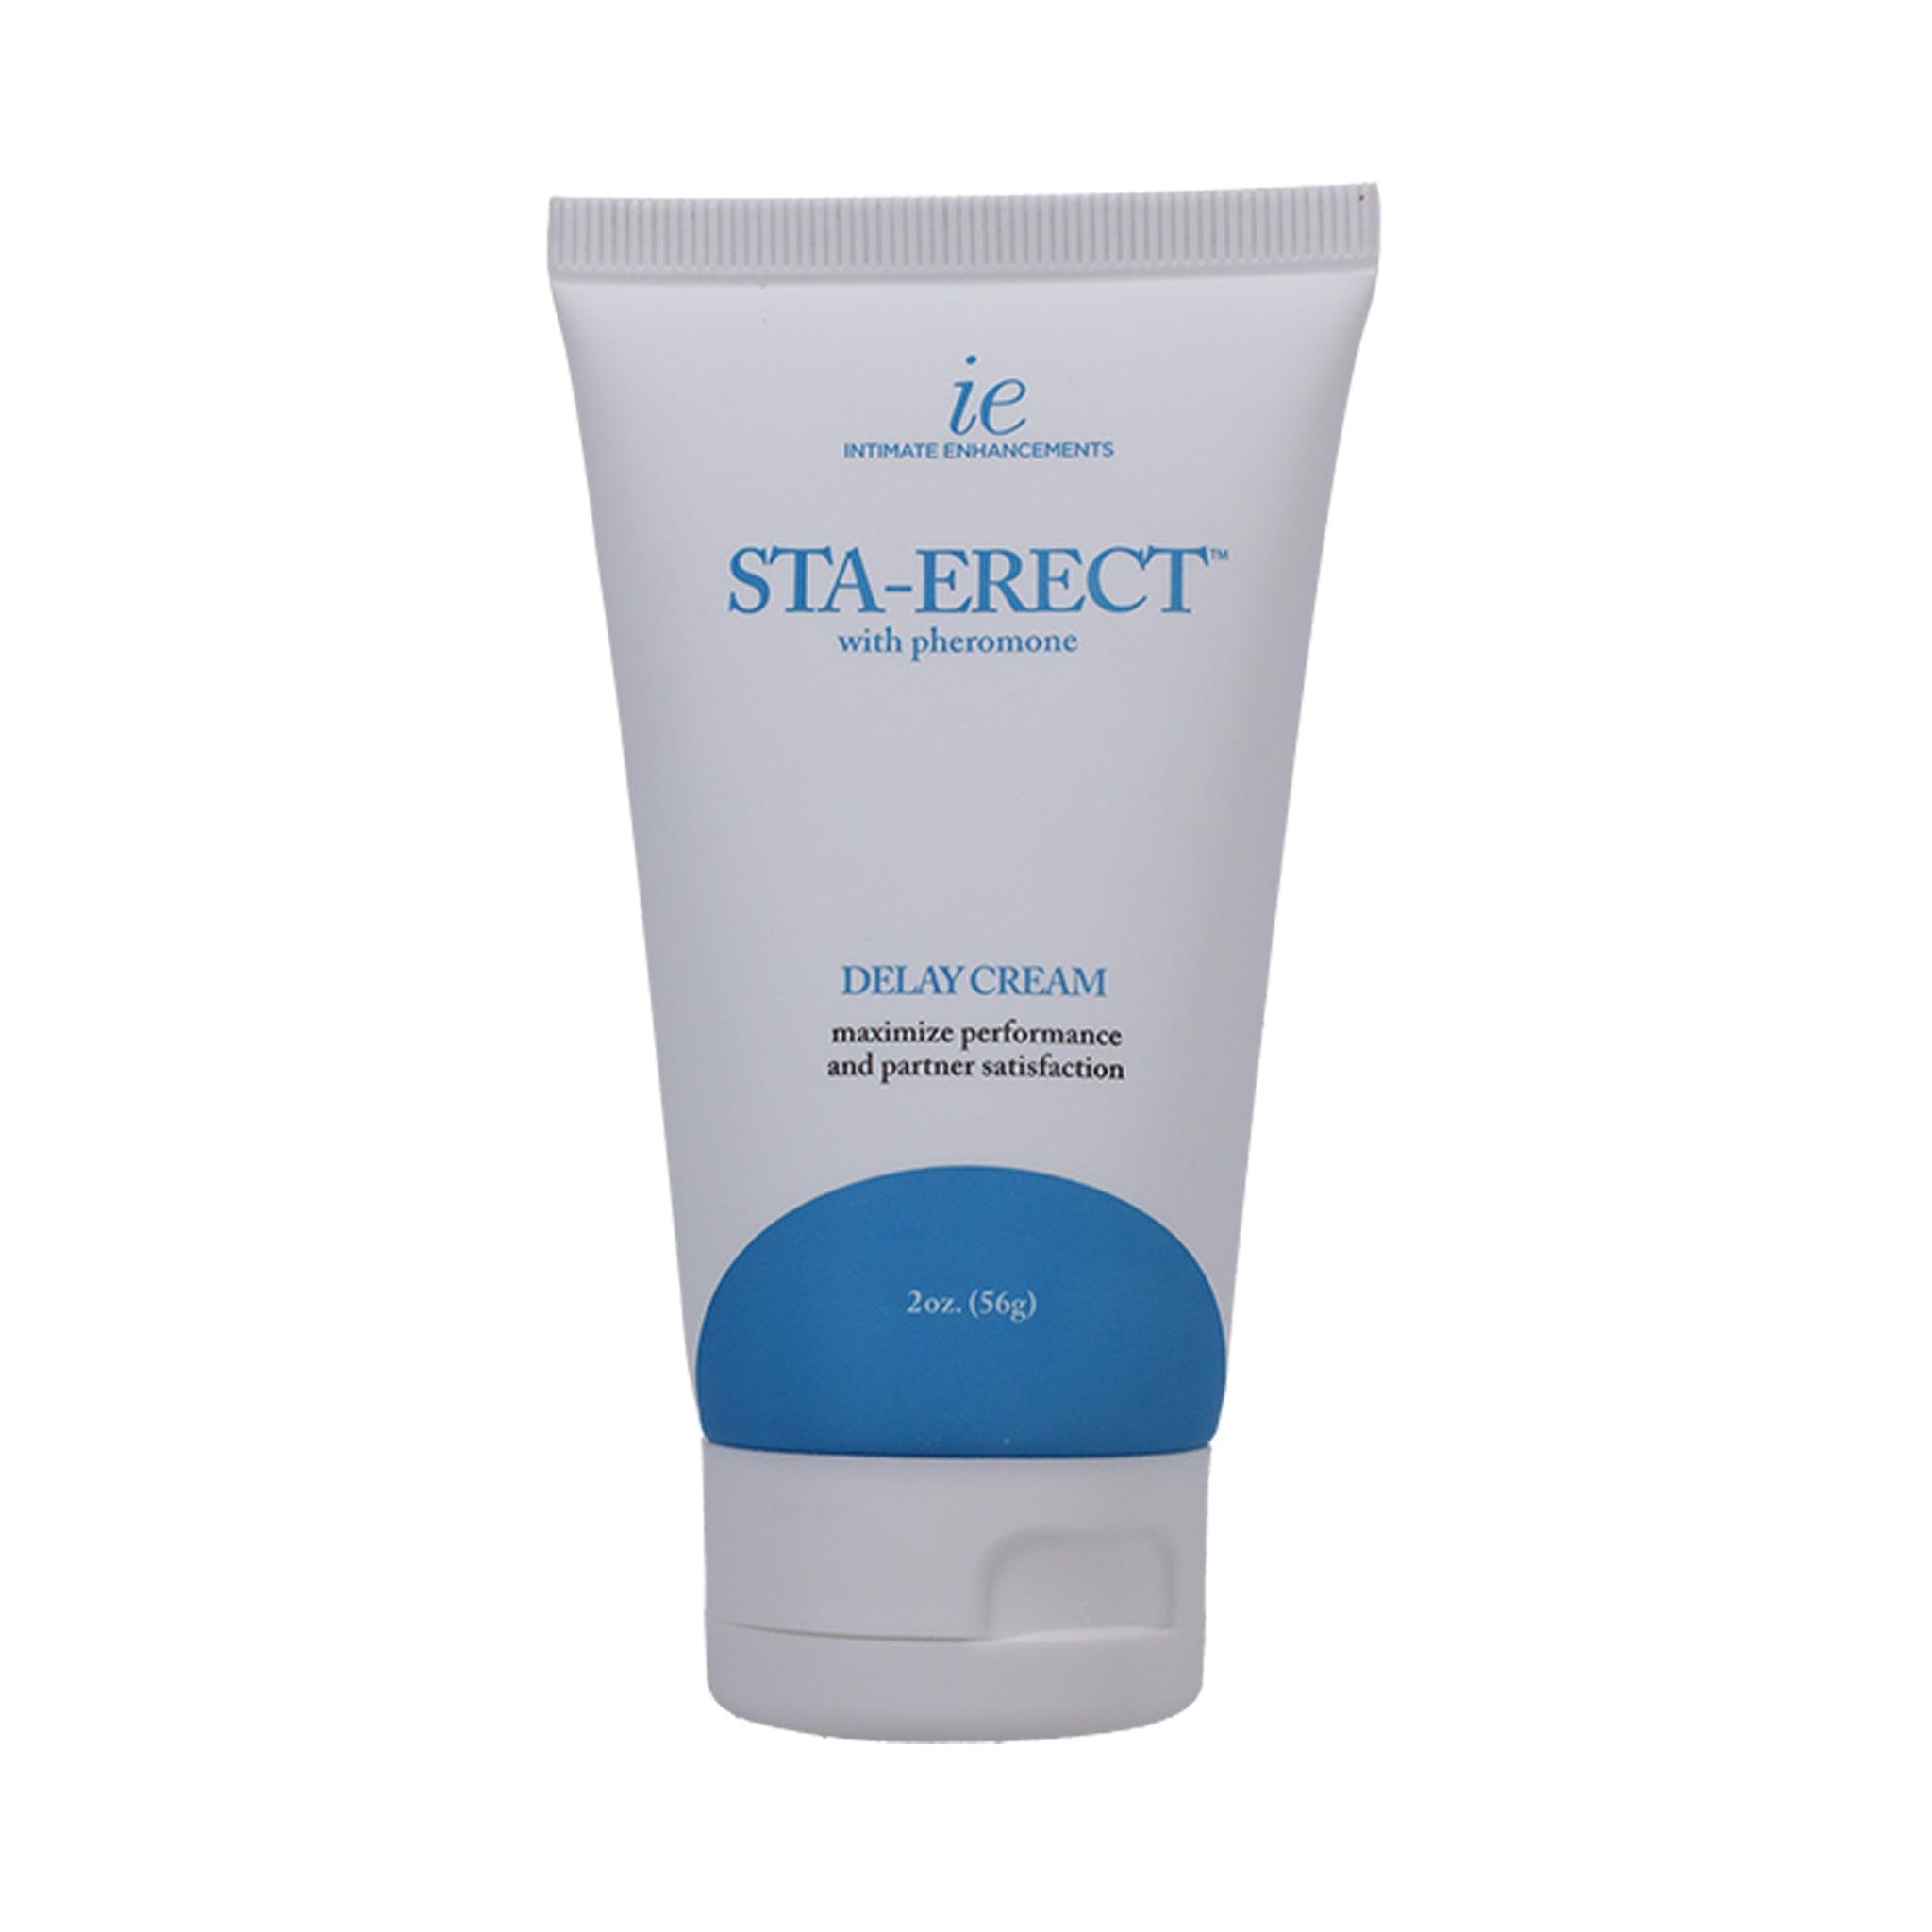 Sta-Erect Delay Cream for Men 2 oz (56 g) - CheapLubes.com